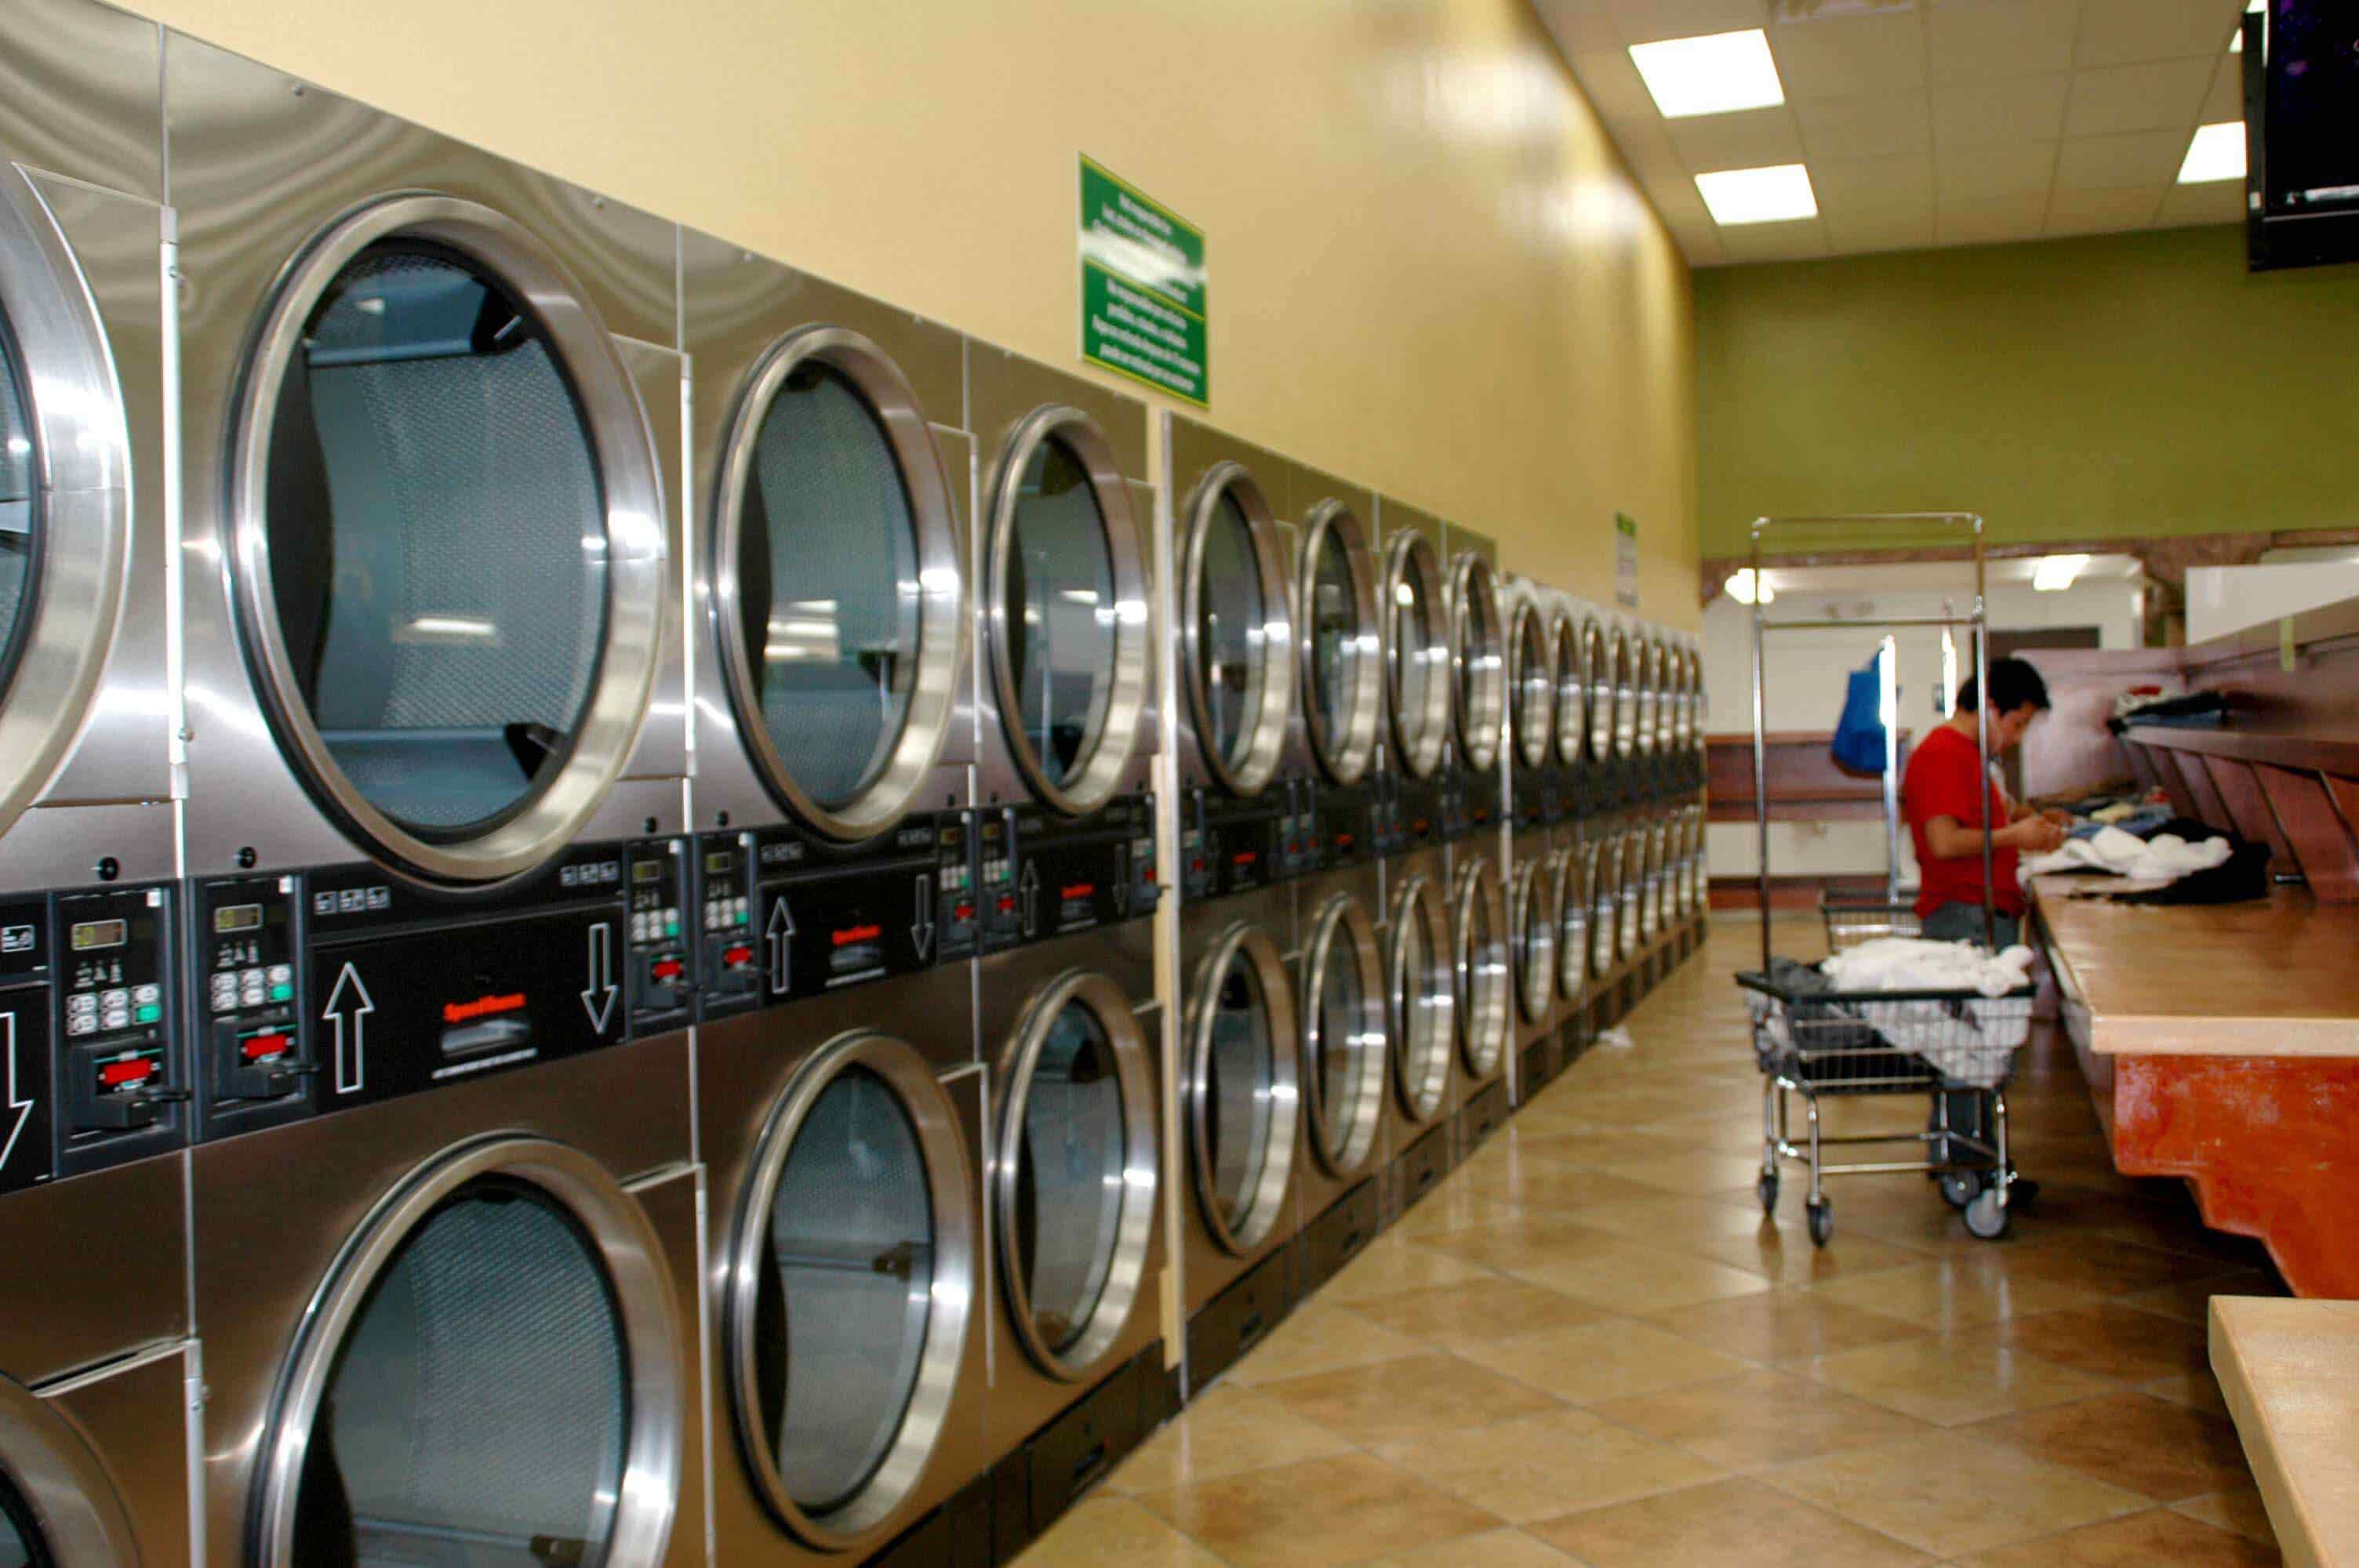 Laundry Shop Interior Design